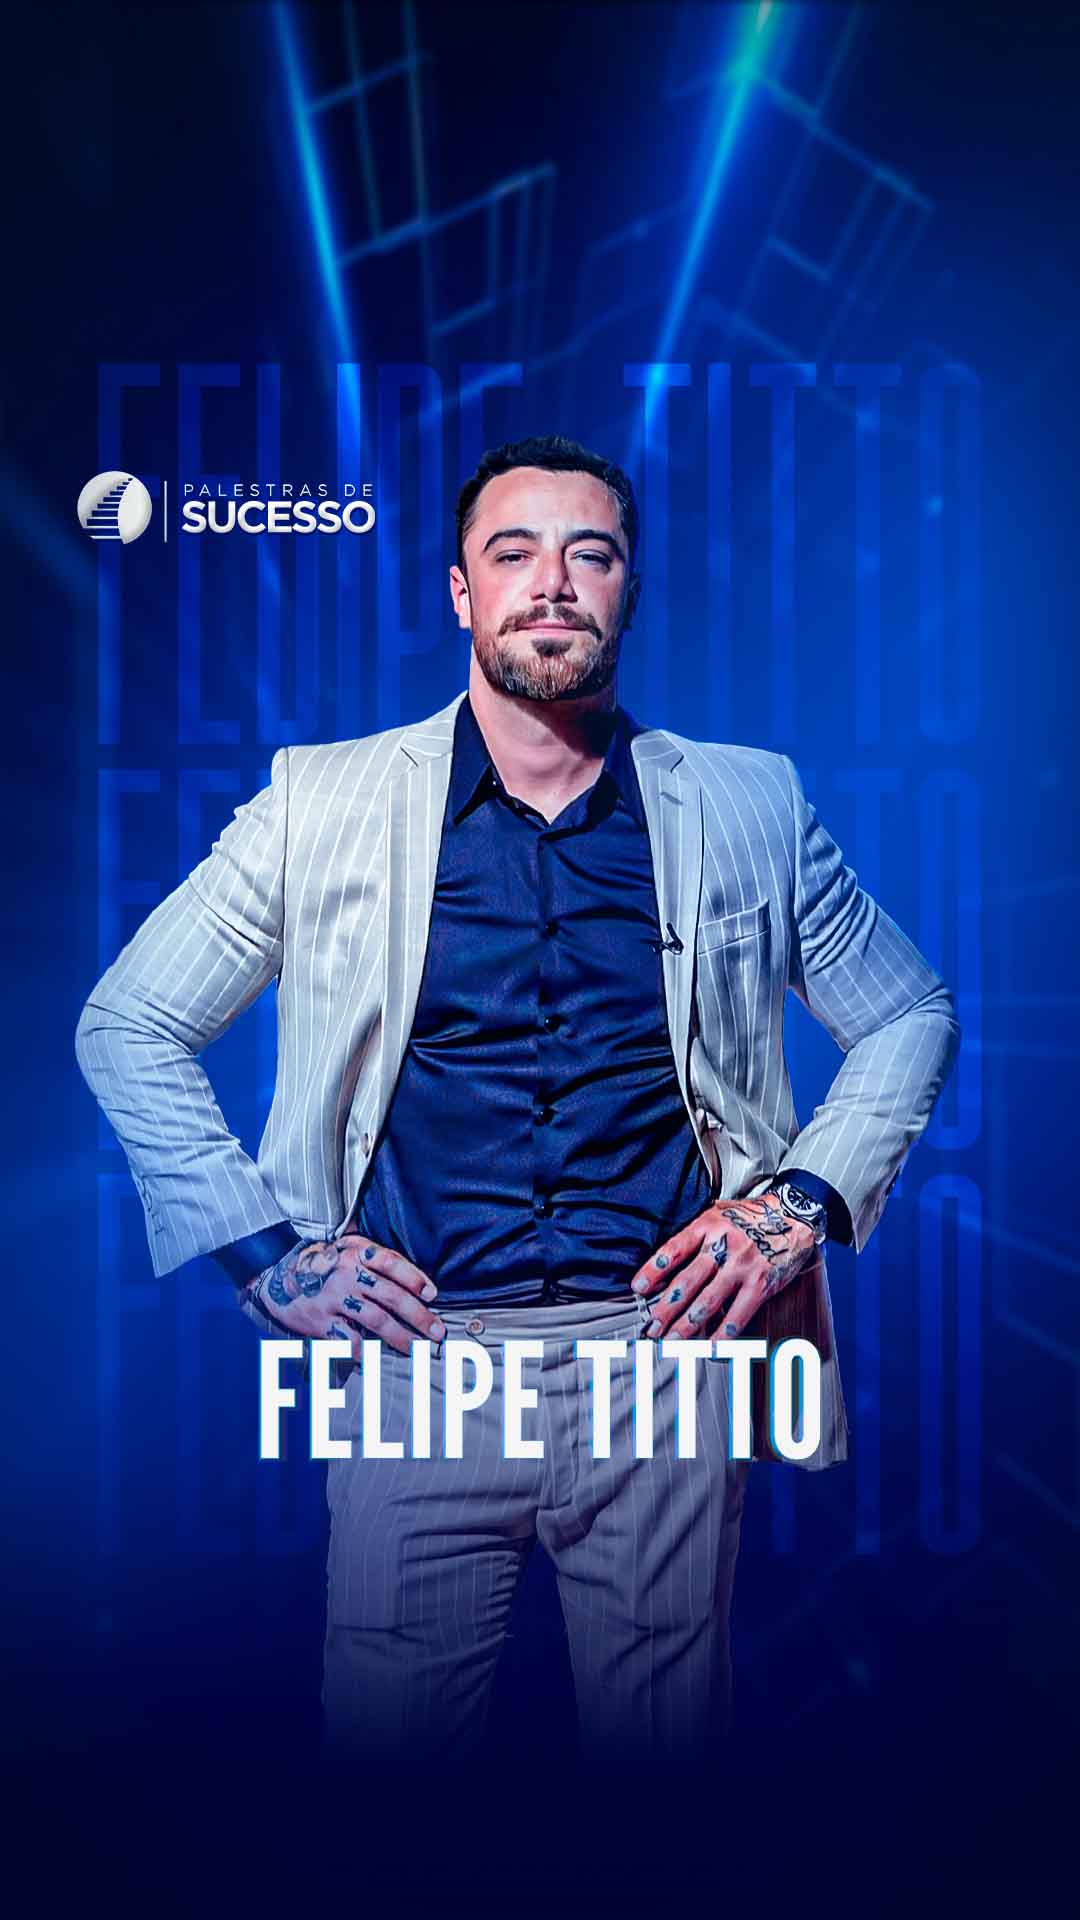 Palestra com Felipe Titto - Palestras de Sucesso